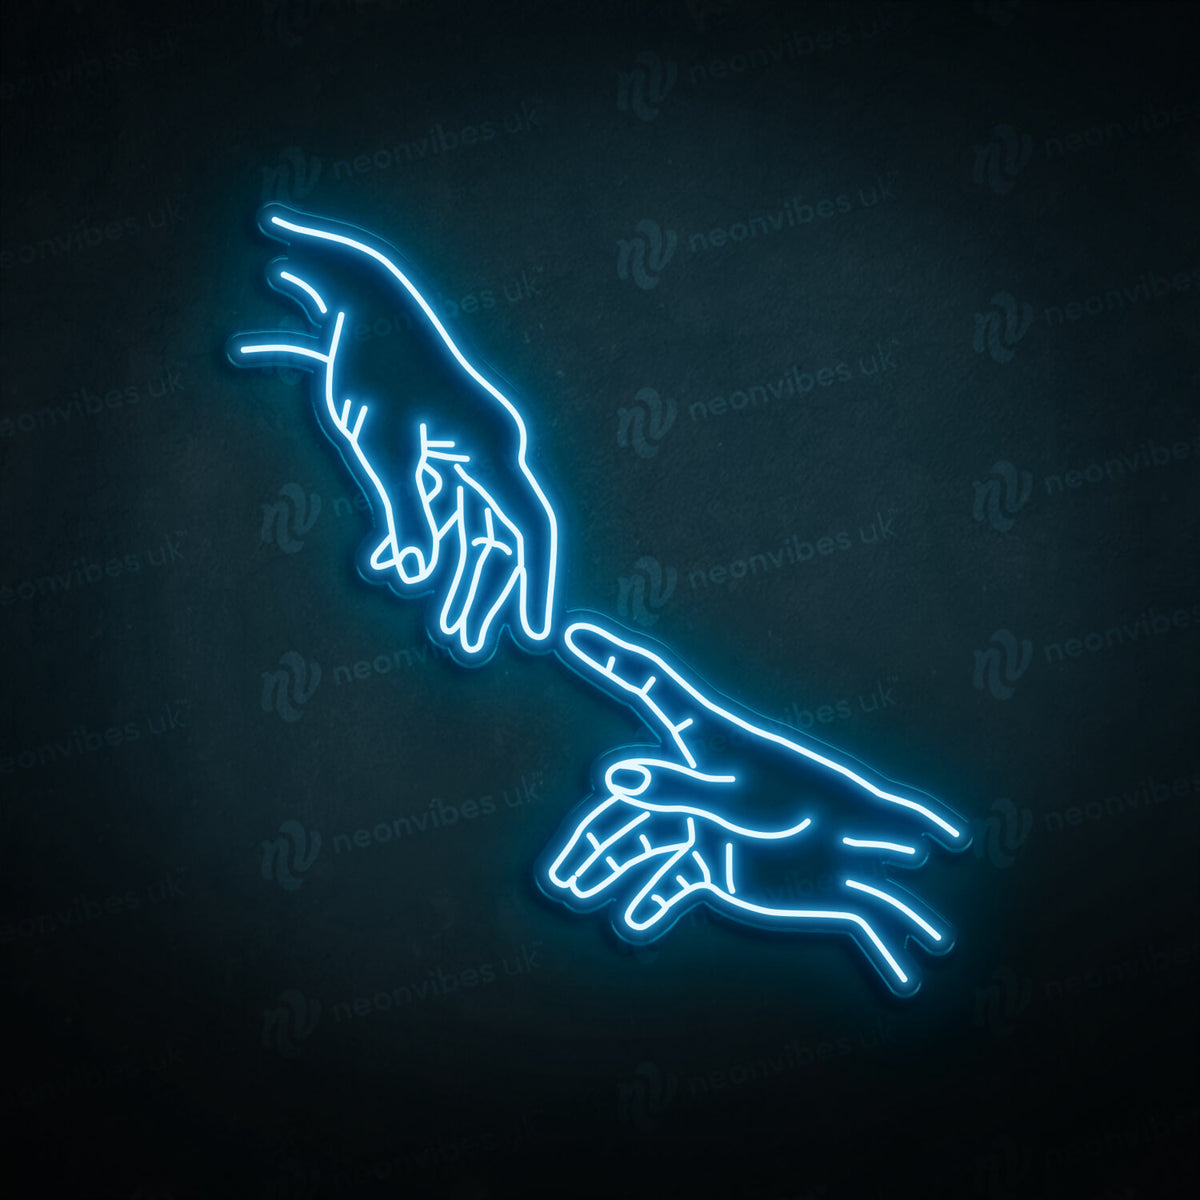 Hand of god neon sign